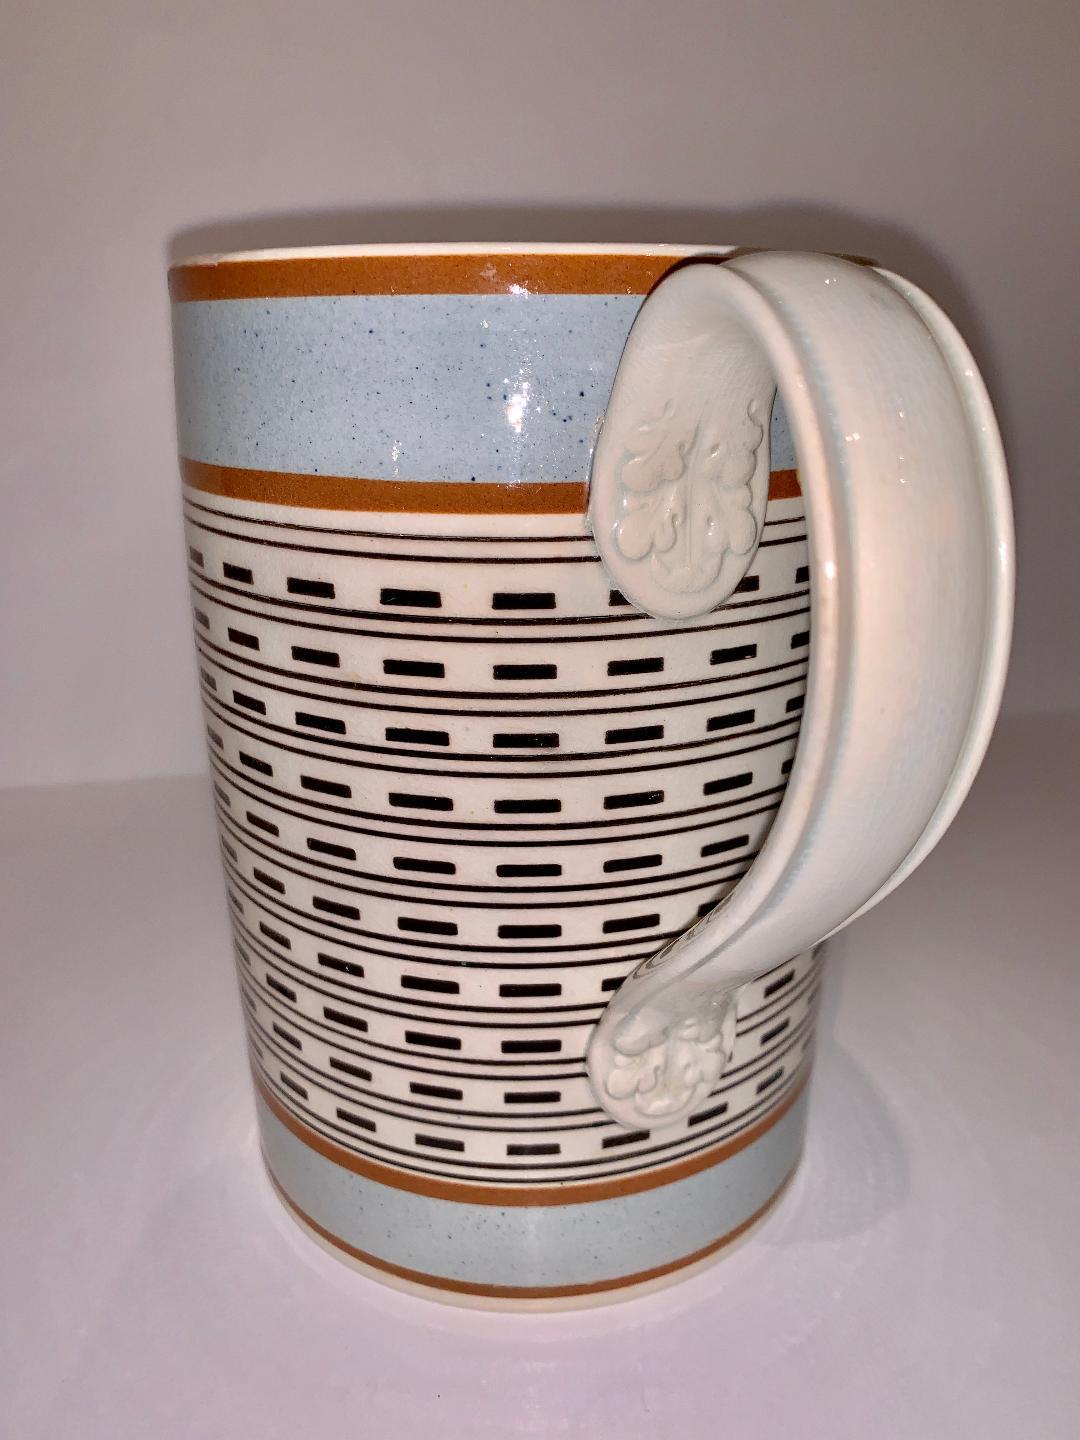 Earthenware Quart Size Mochaware Mug England, circa 1820